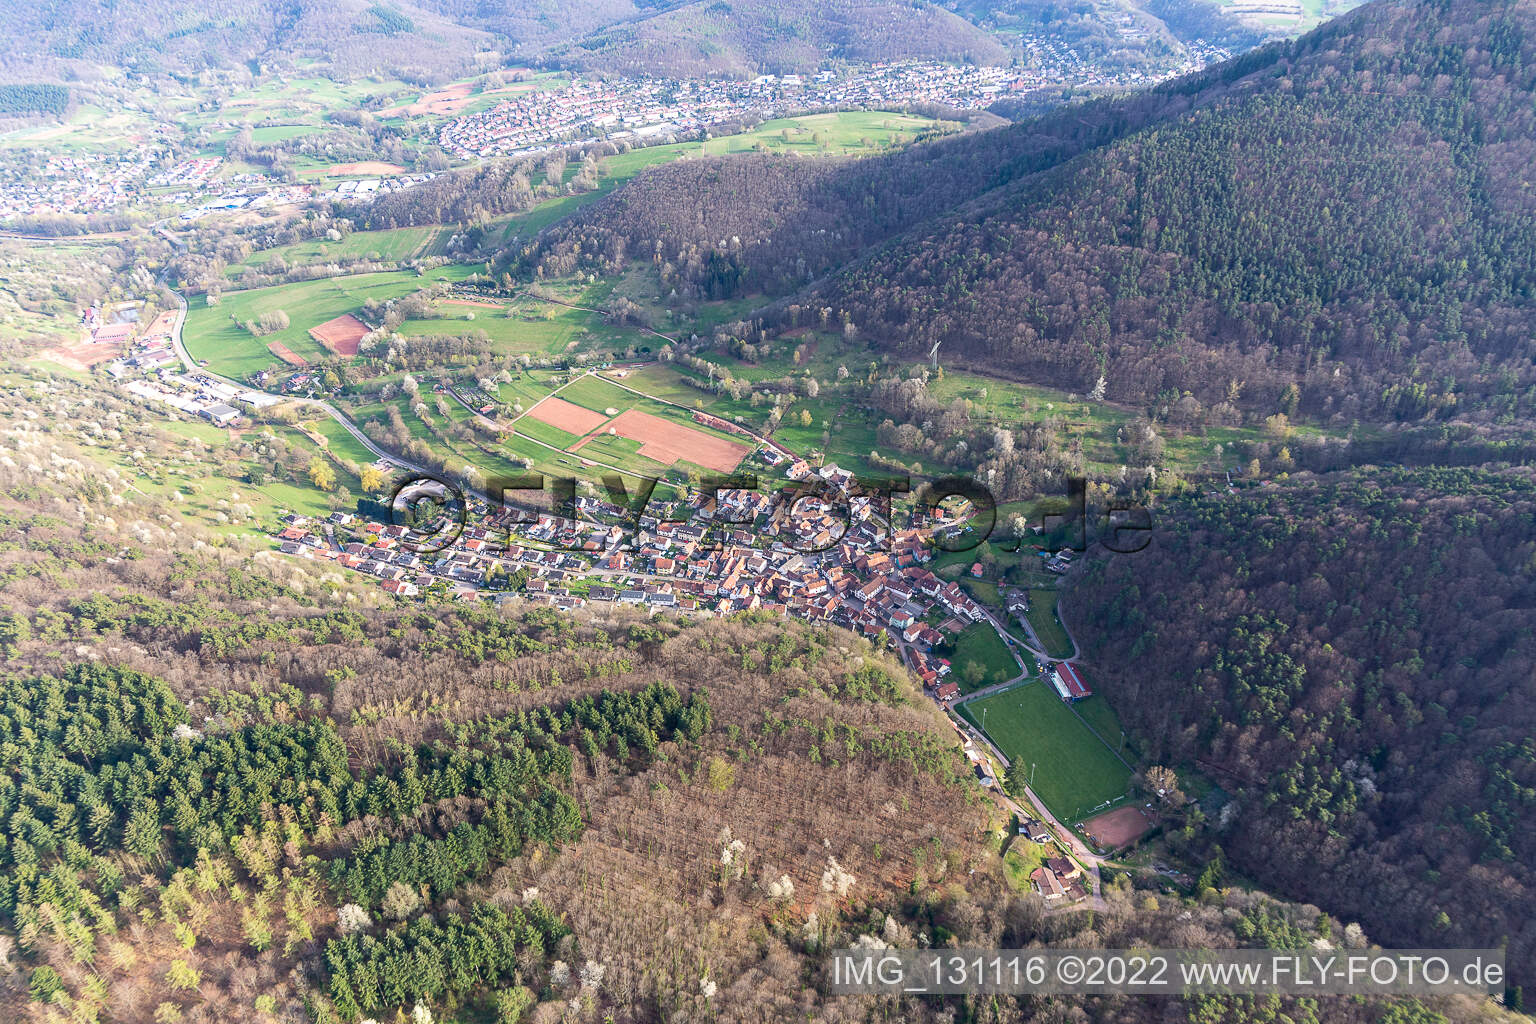 Drone recording of District Gräfenhausen in Annweiler am Trifels in the state Rhineland-Palatinate, Germany